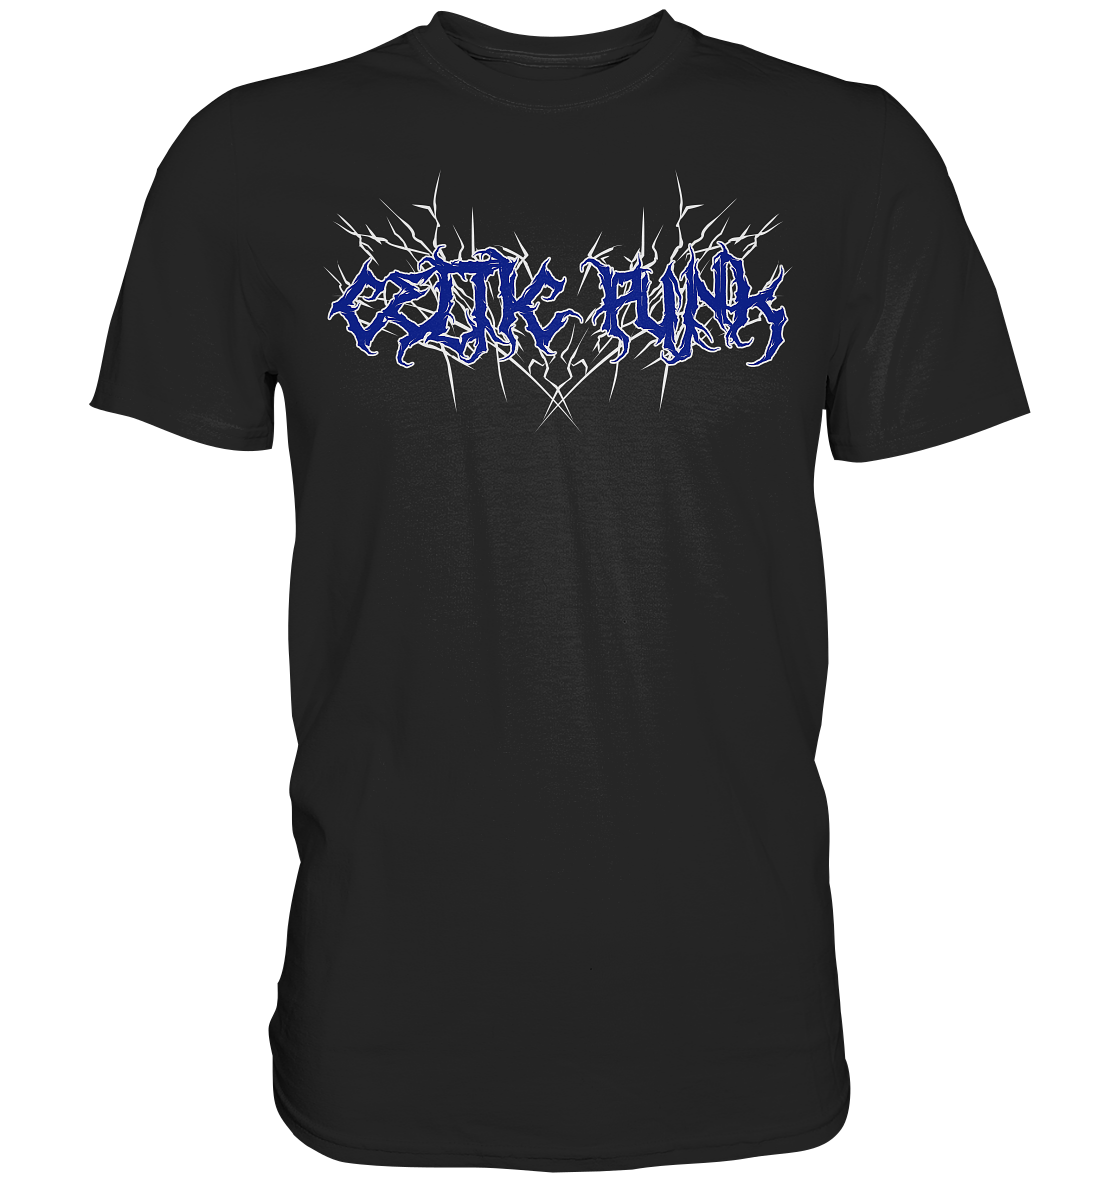 Celtic Punk "Metal Band" - Premium Shirt